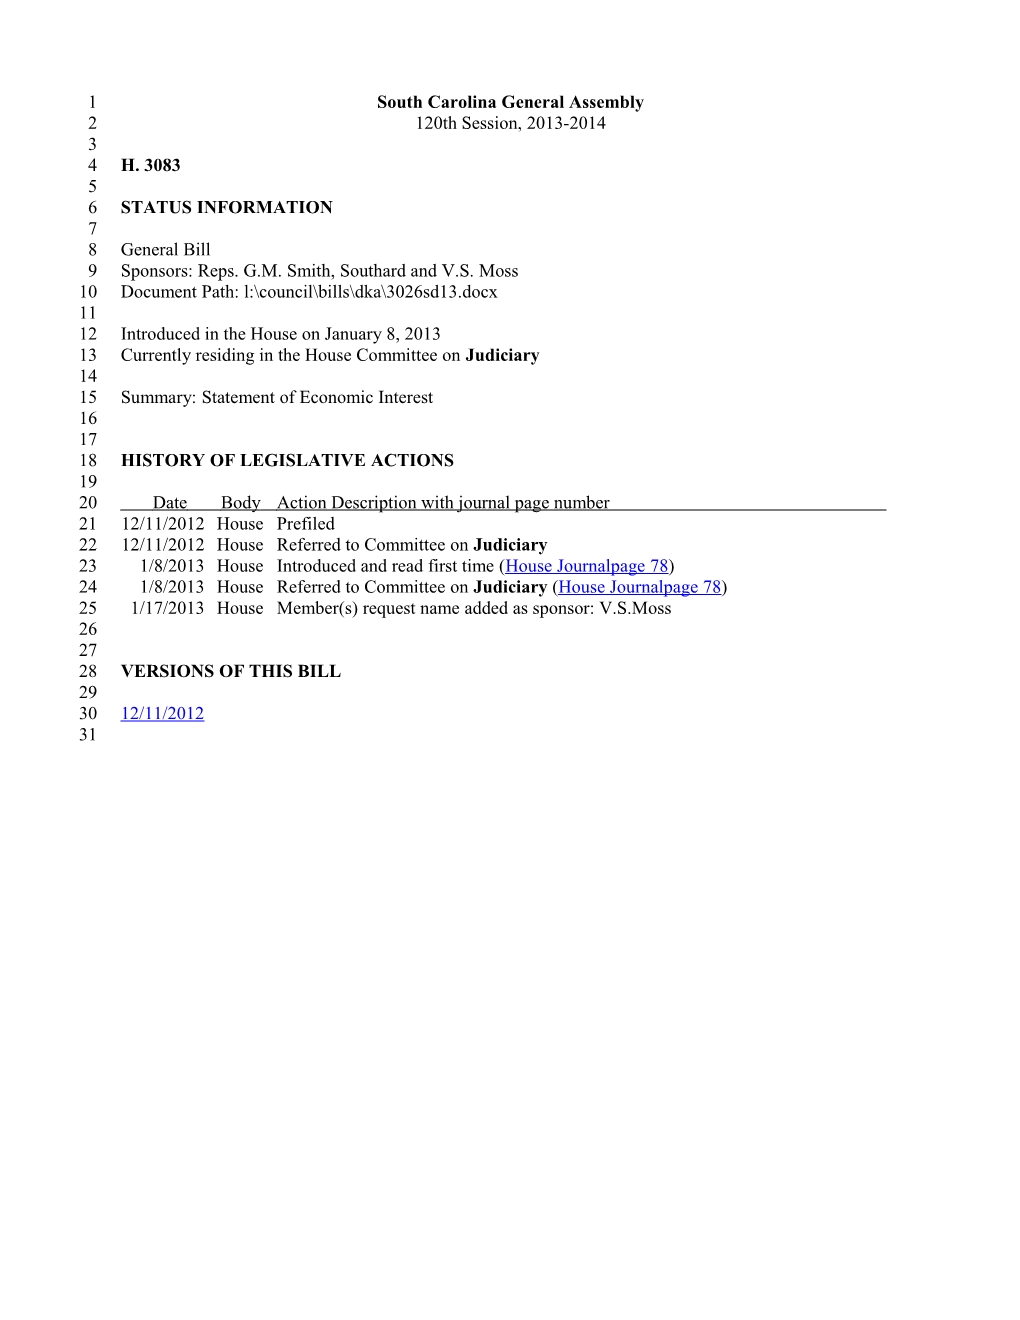 2013-2014 Bill 3083: Statement of Economic Interest - South Carolina Legislature Online